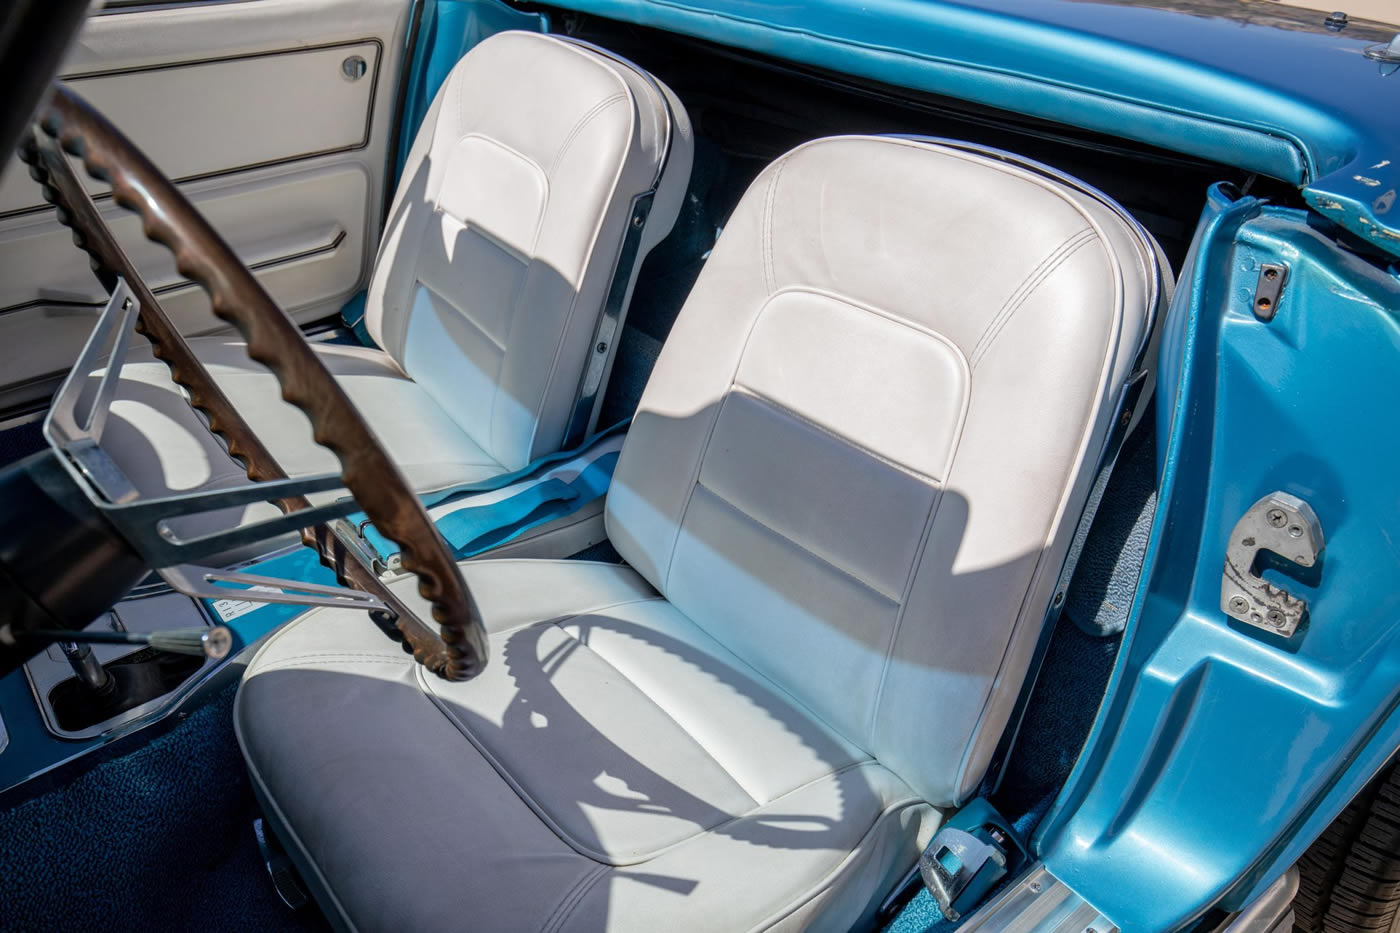 1965 Corvette Stingray Convertible in Nassau Blue